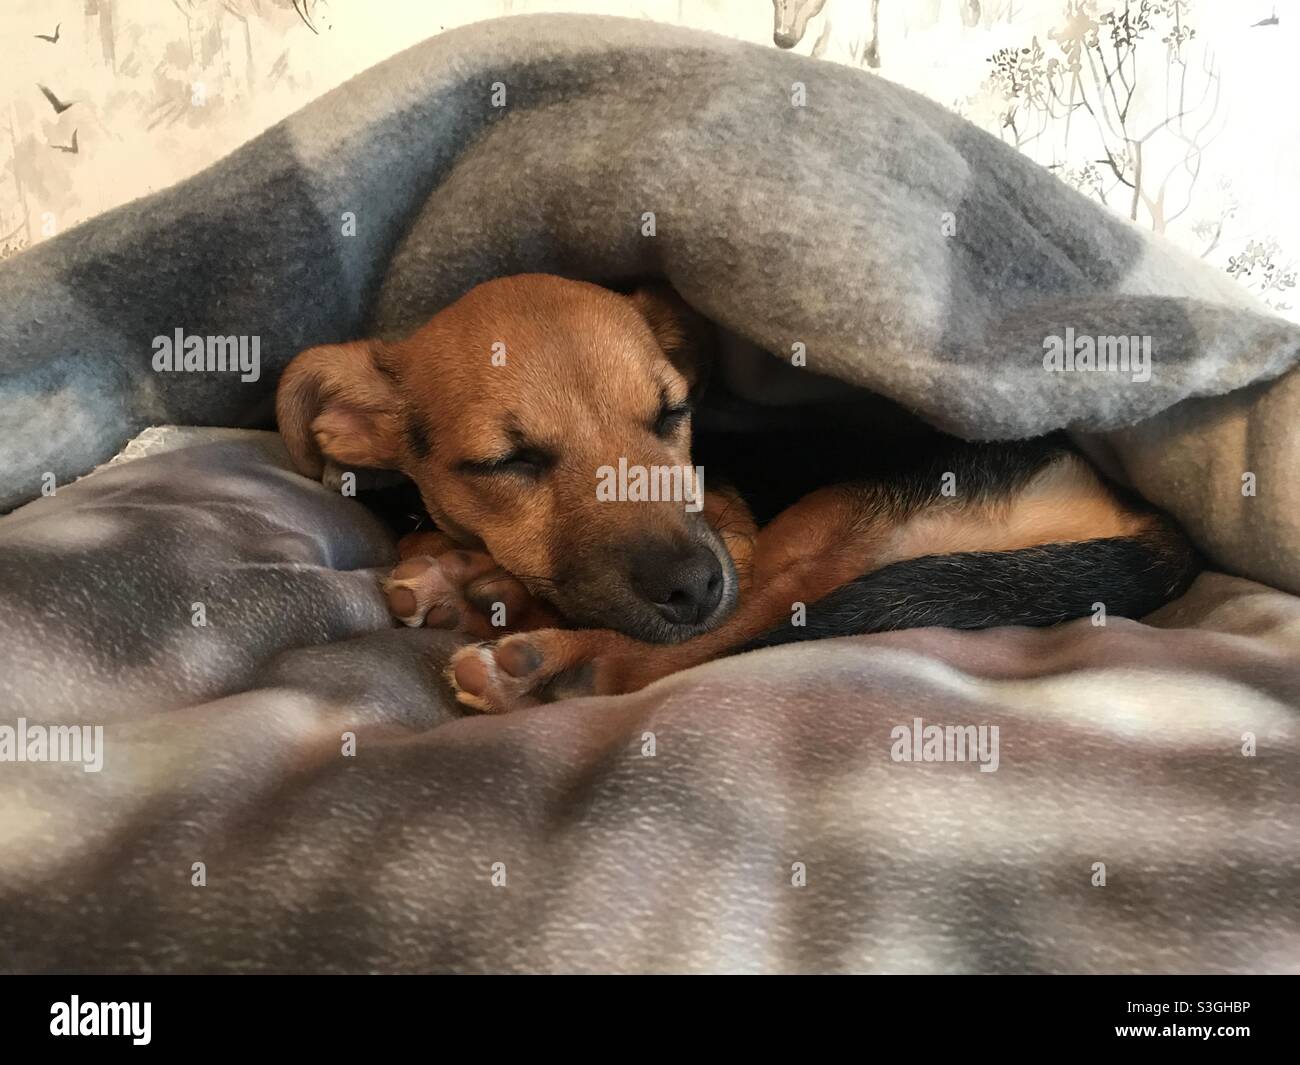 Sleeping jackchi puppy in blanket Stock Photo